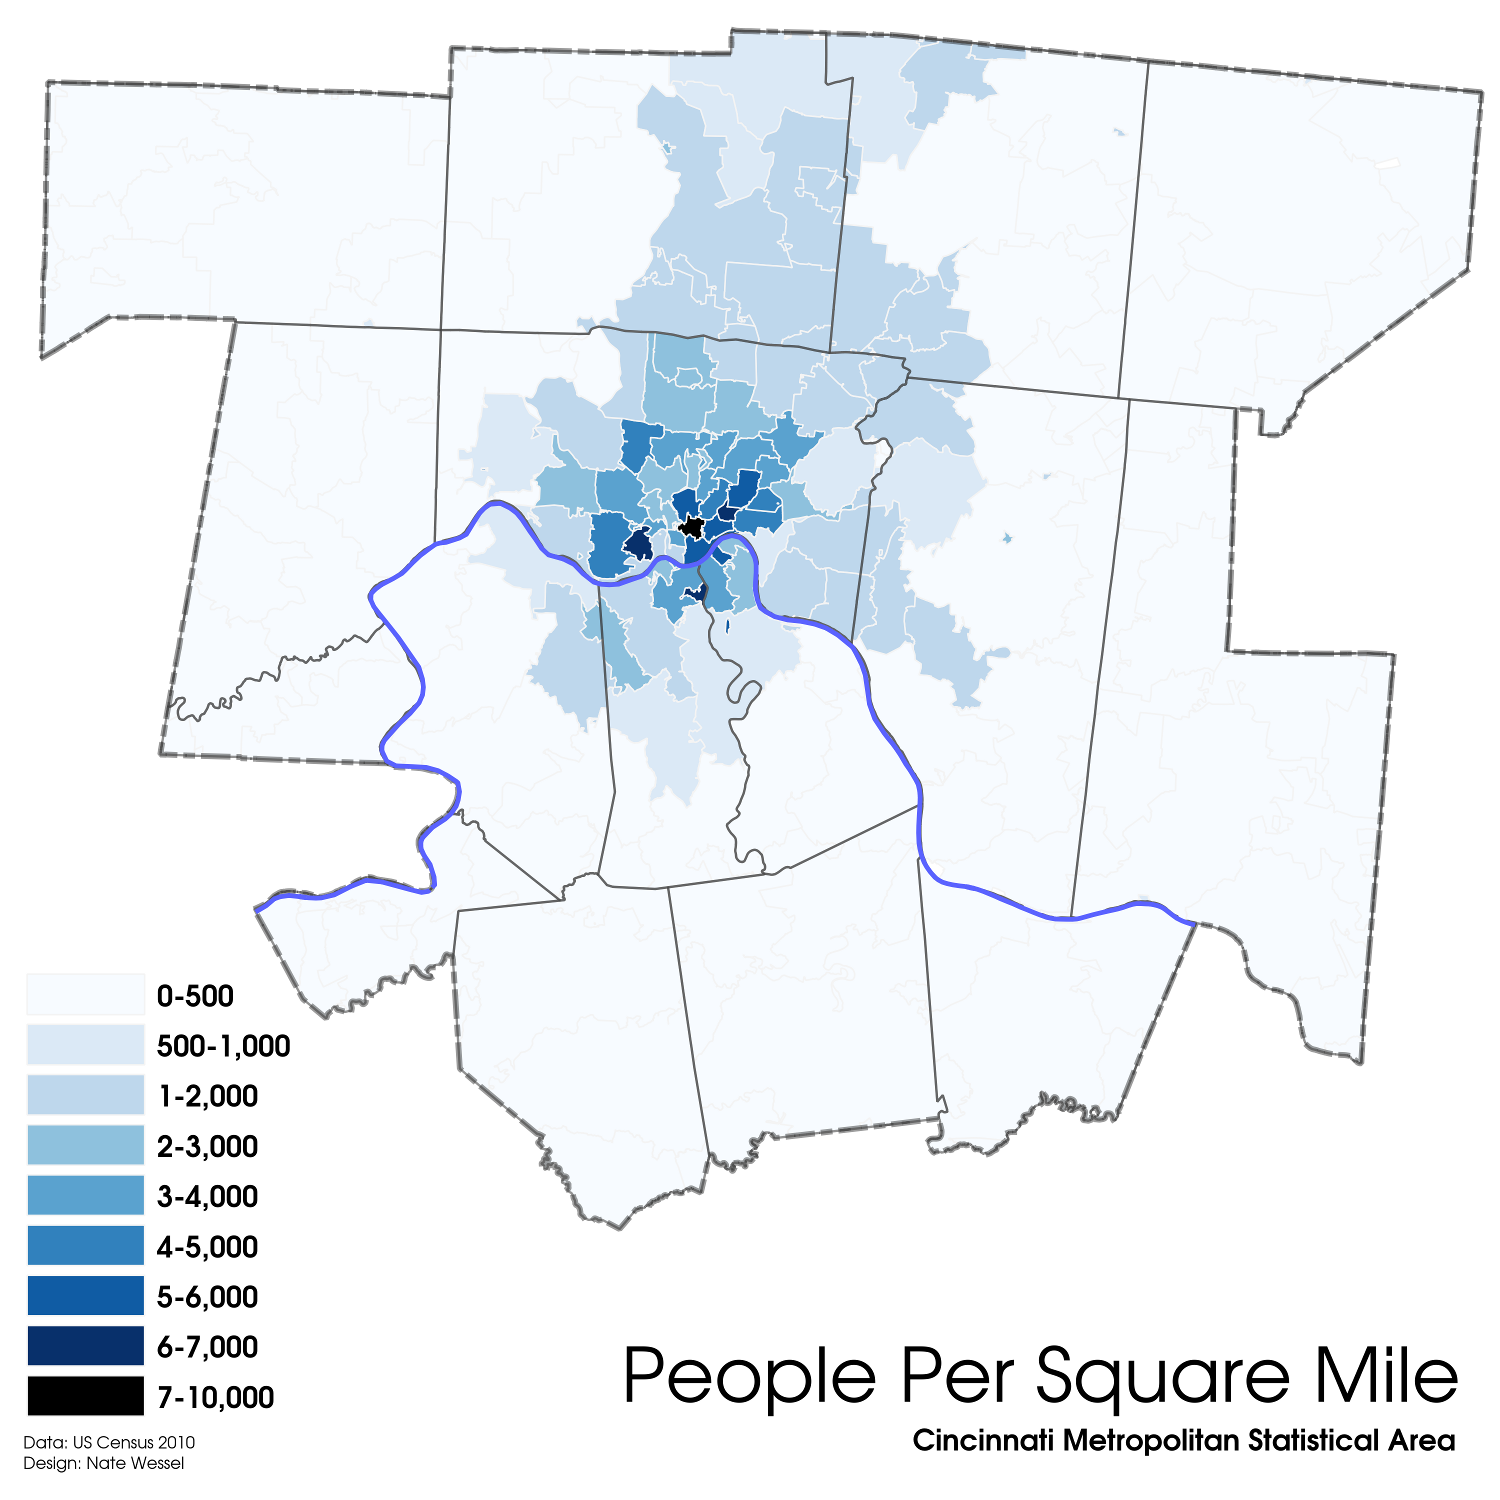 InnerCity Neighborhoods Center of Population, Economic Power in